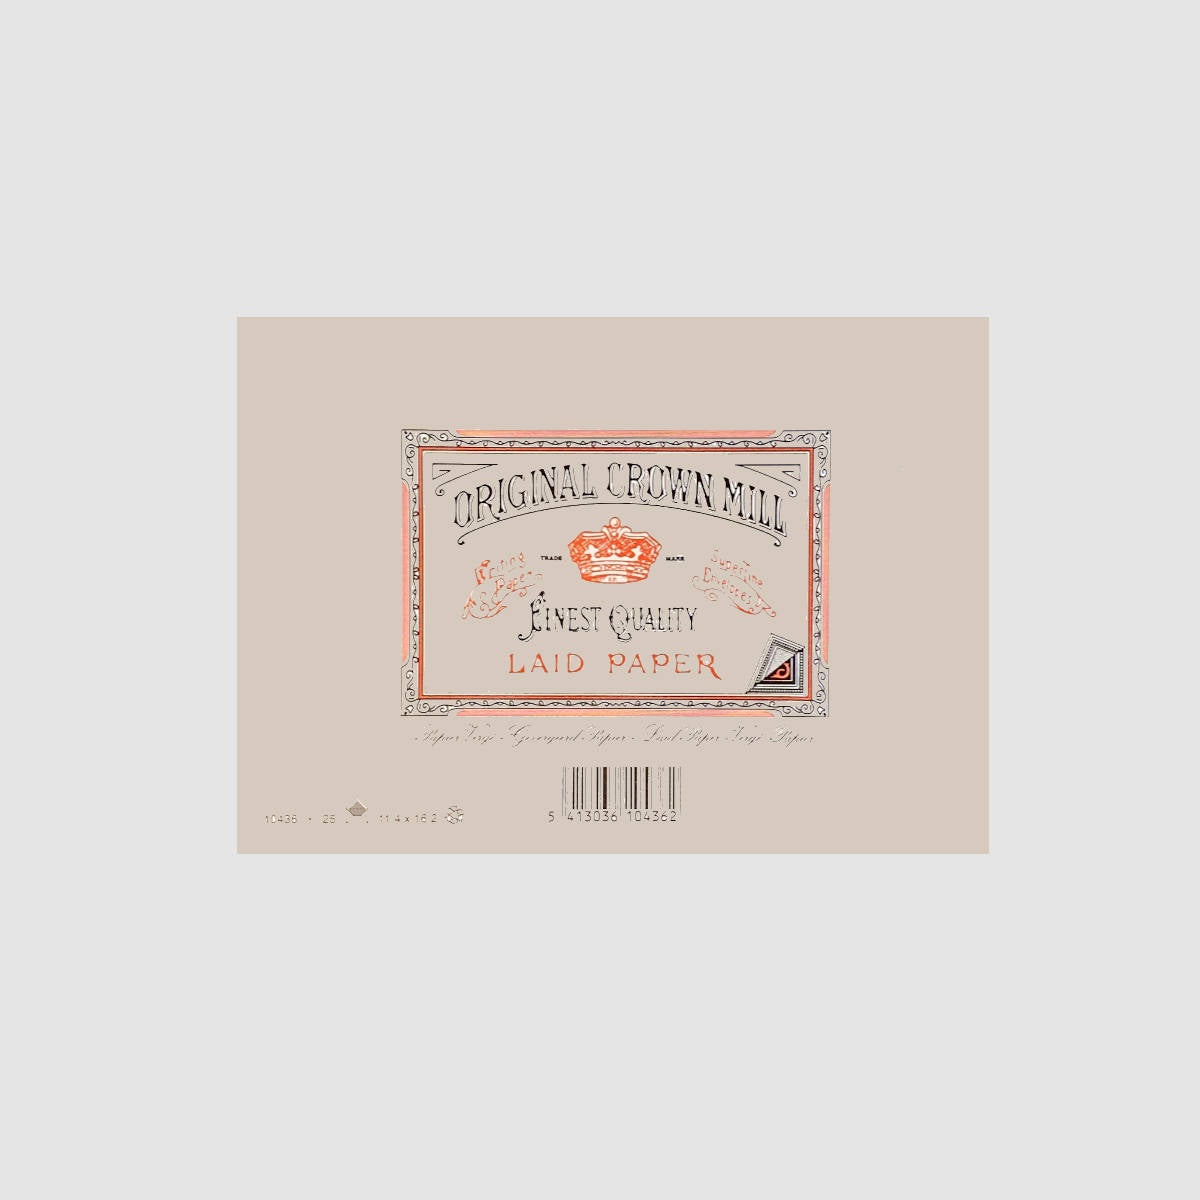 Laid Paper Envelopes 25 Pack – C6 Grey - Original Crown Mill